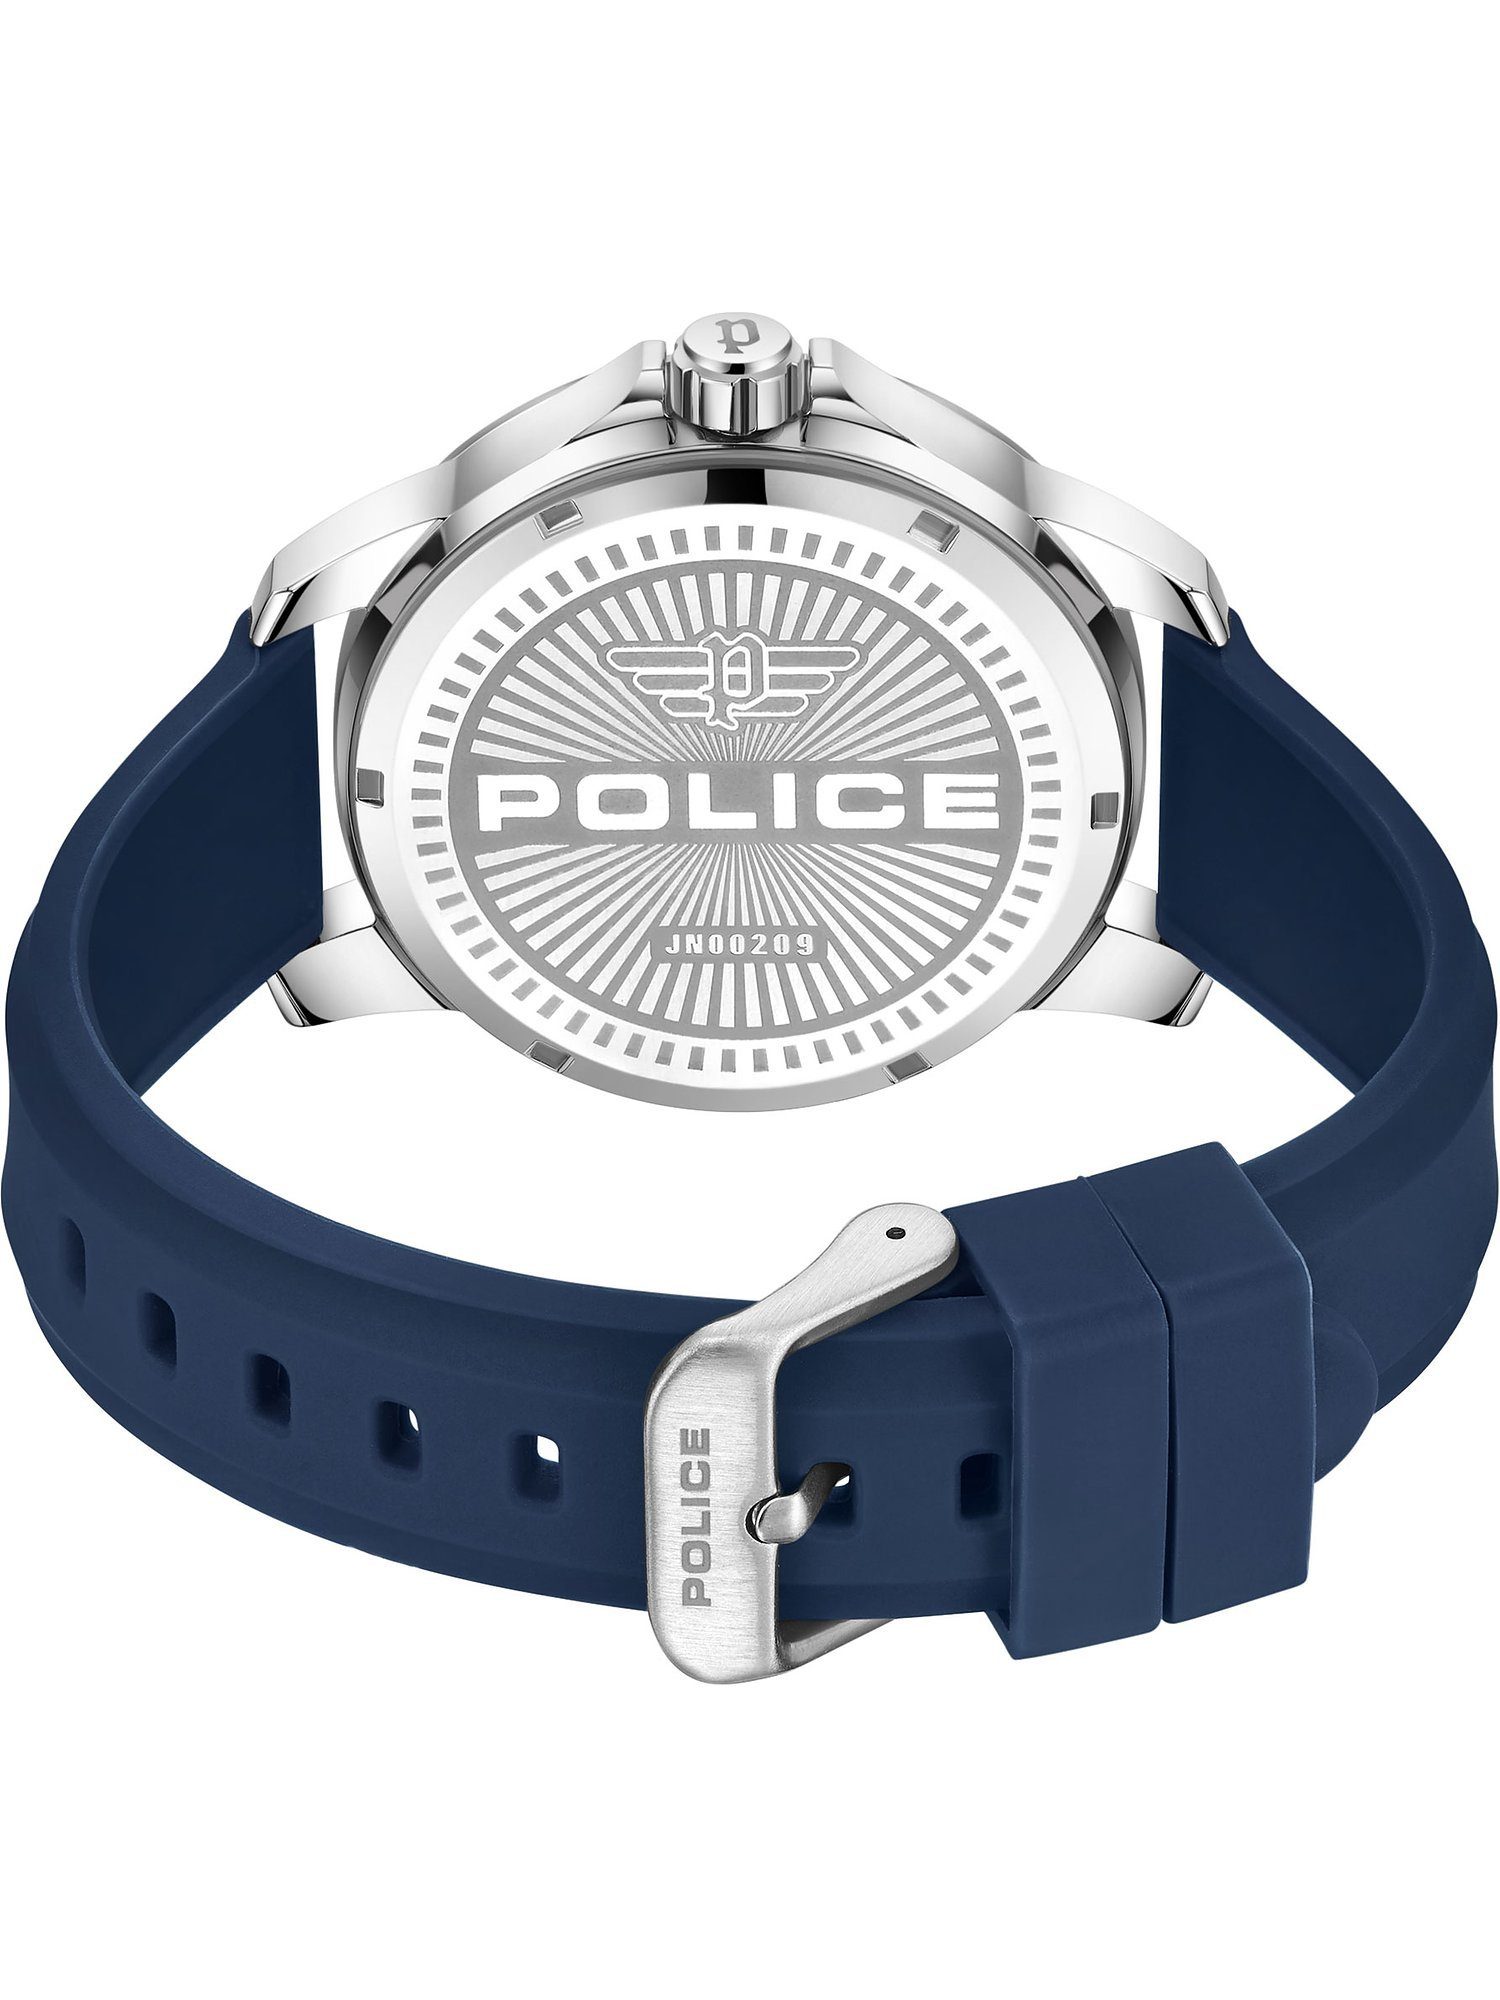 Police Quarzuhr Police Herren-Uhren Klassikuhr blau Analog